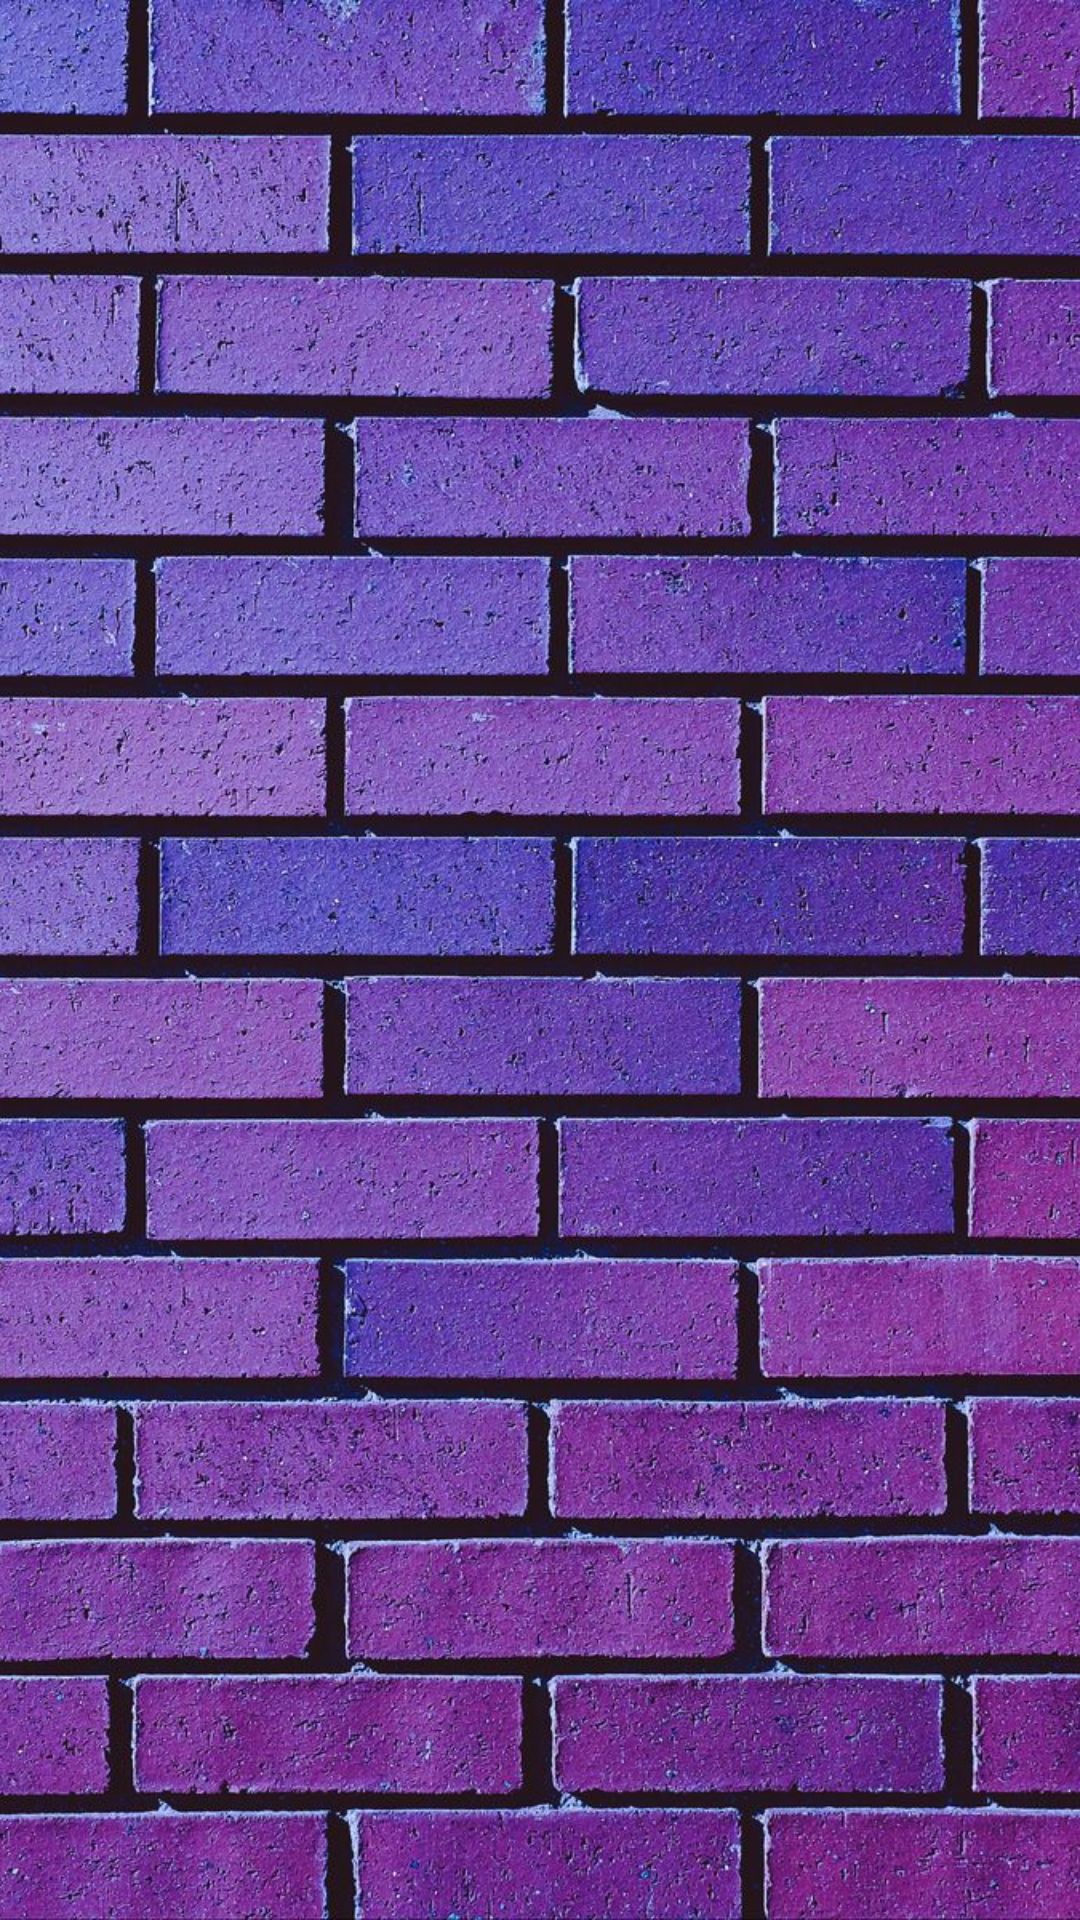 Brick Photos